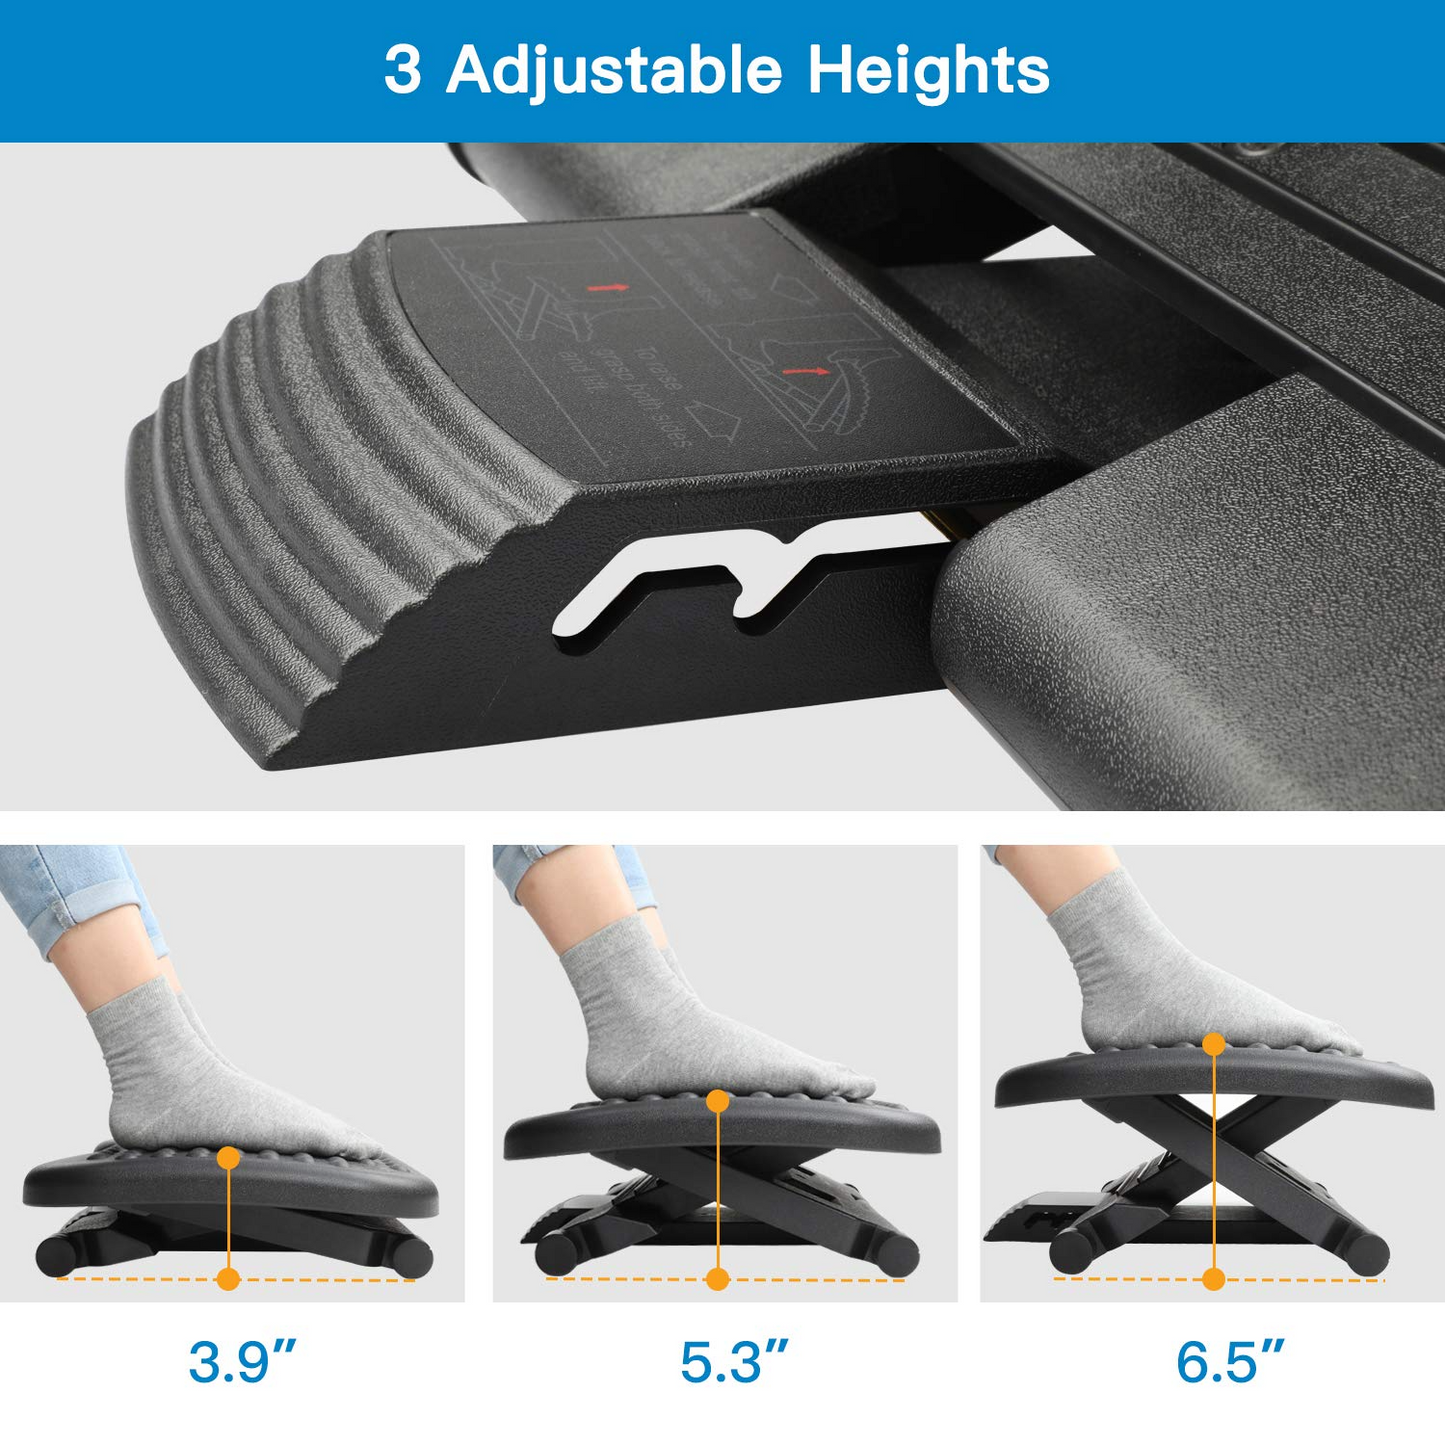 Adjustable Under Desk Footrest - Ergonomic Foot Rest with 3 Height Position